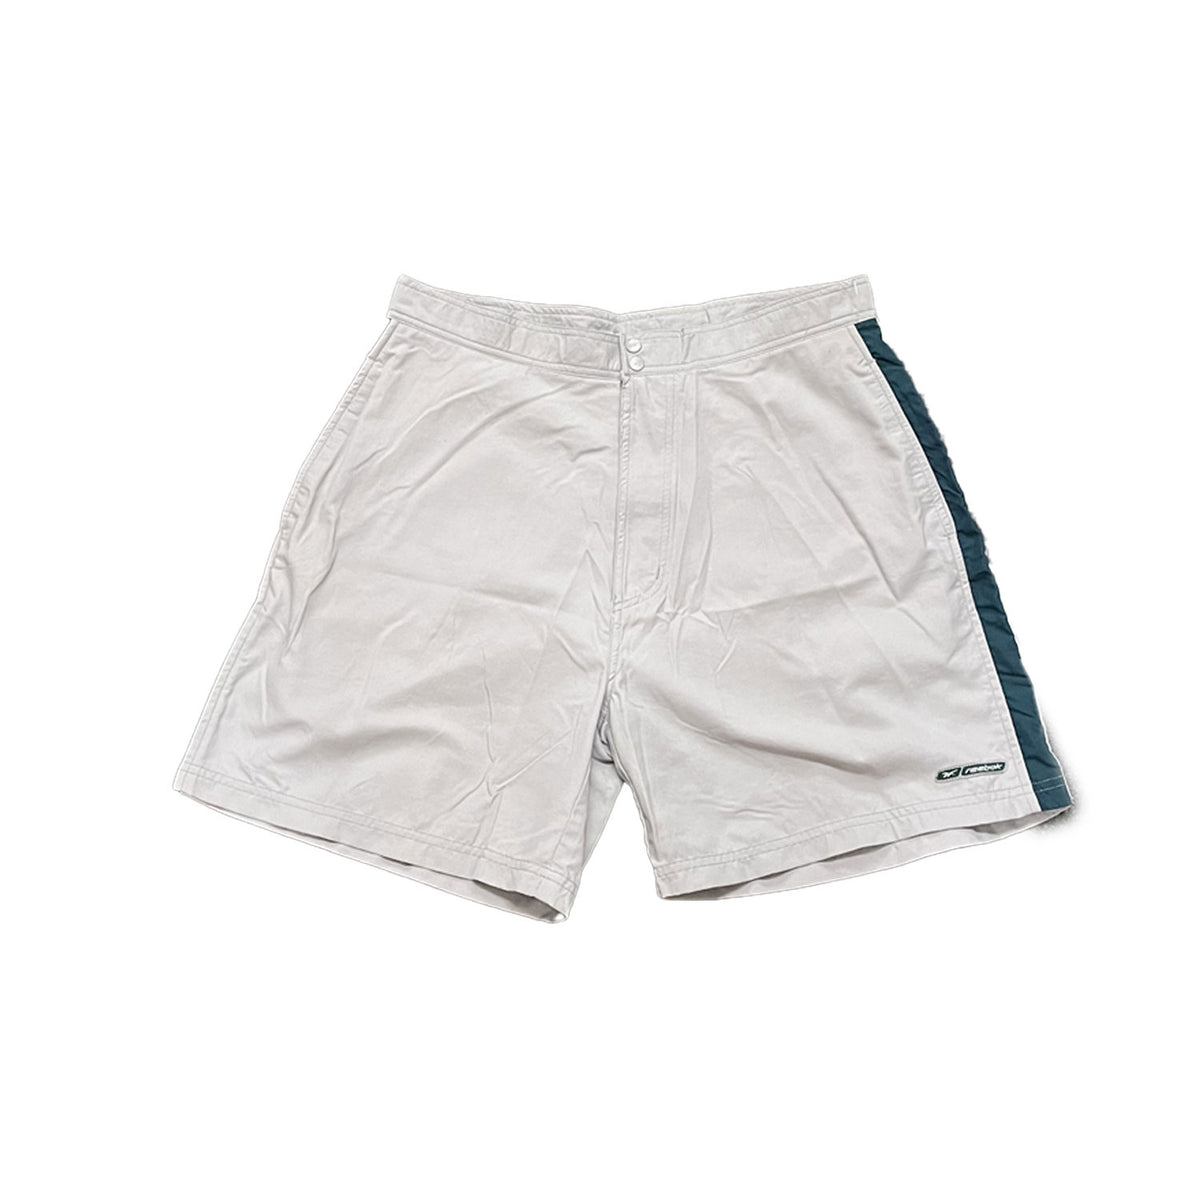 Reebok Original Clearance Contrast Casual Shorts